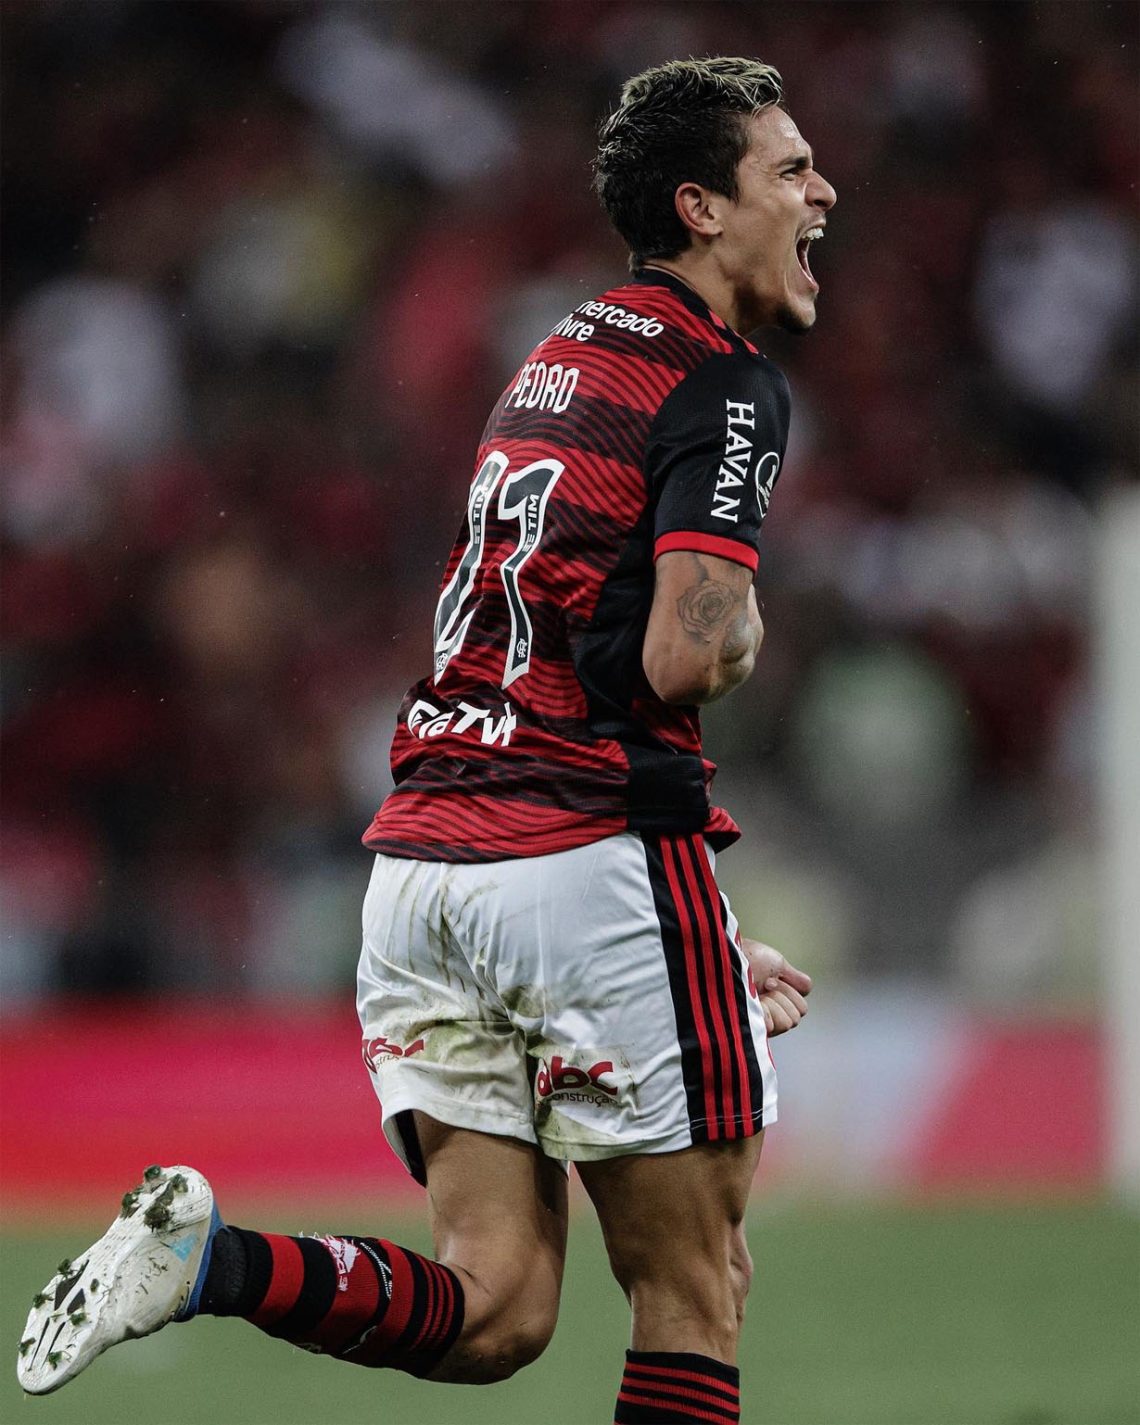 Twitter do Flamengo